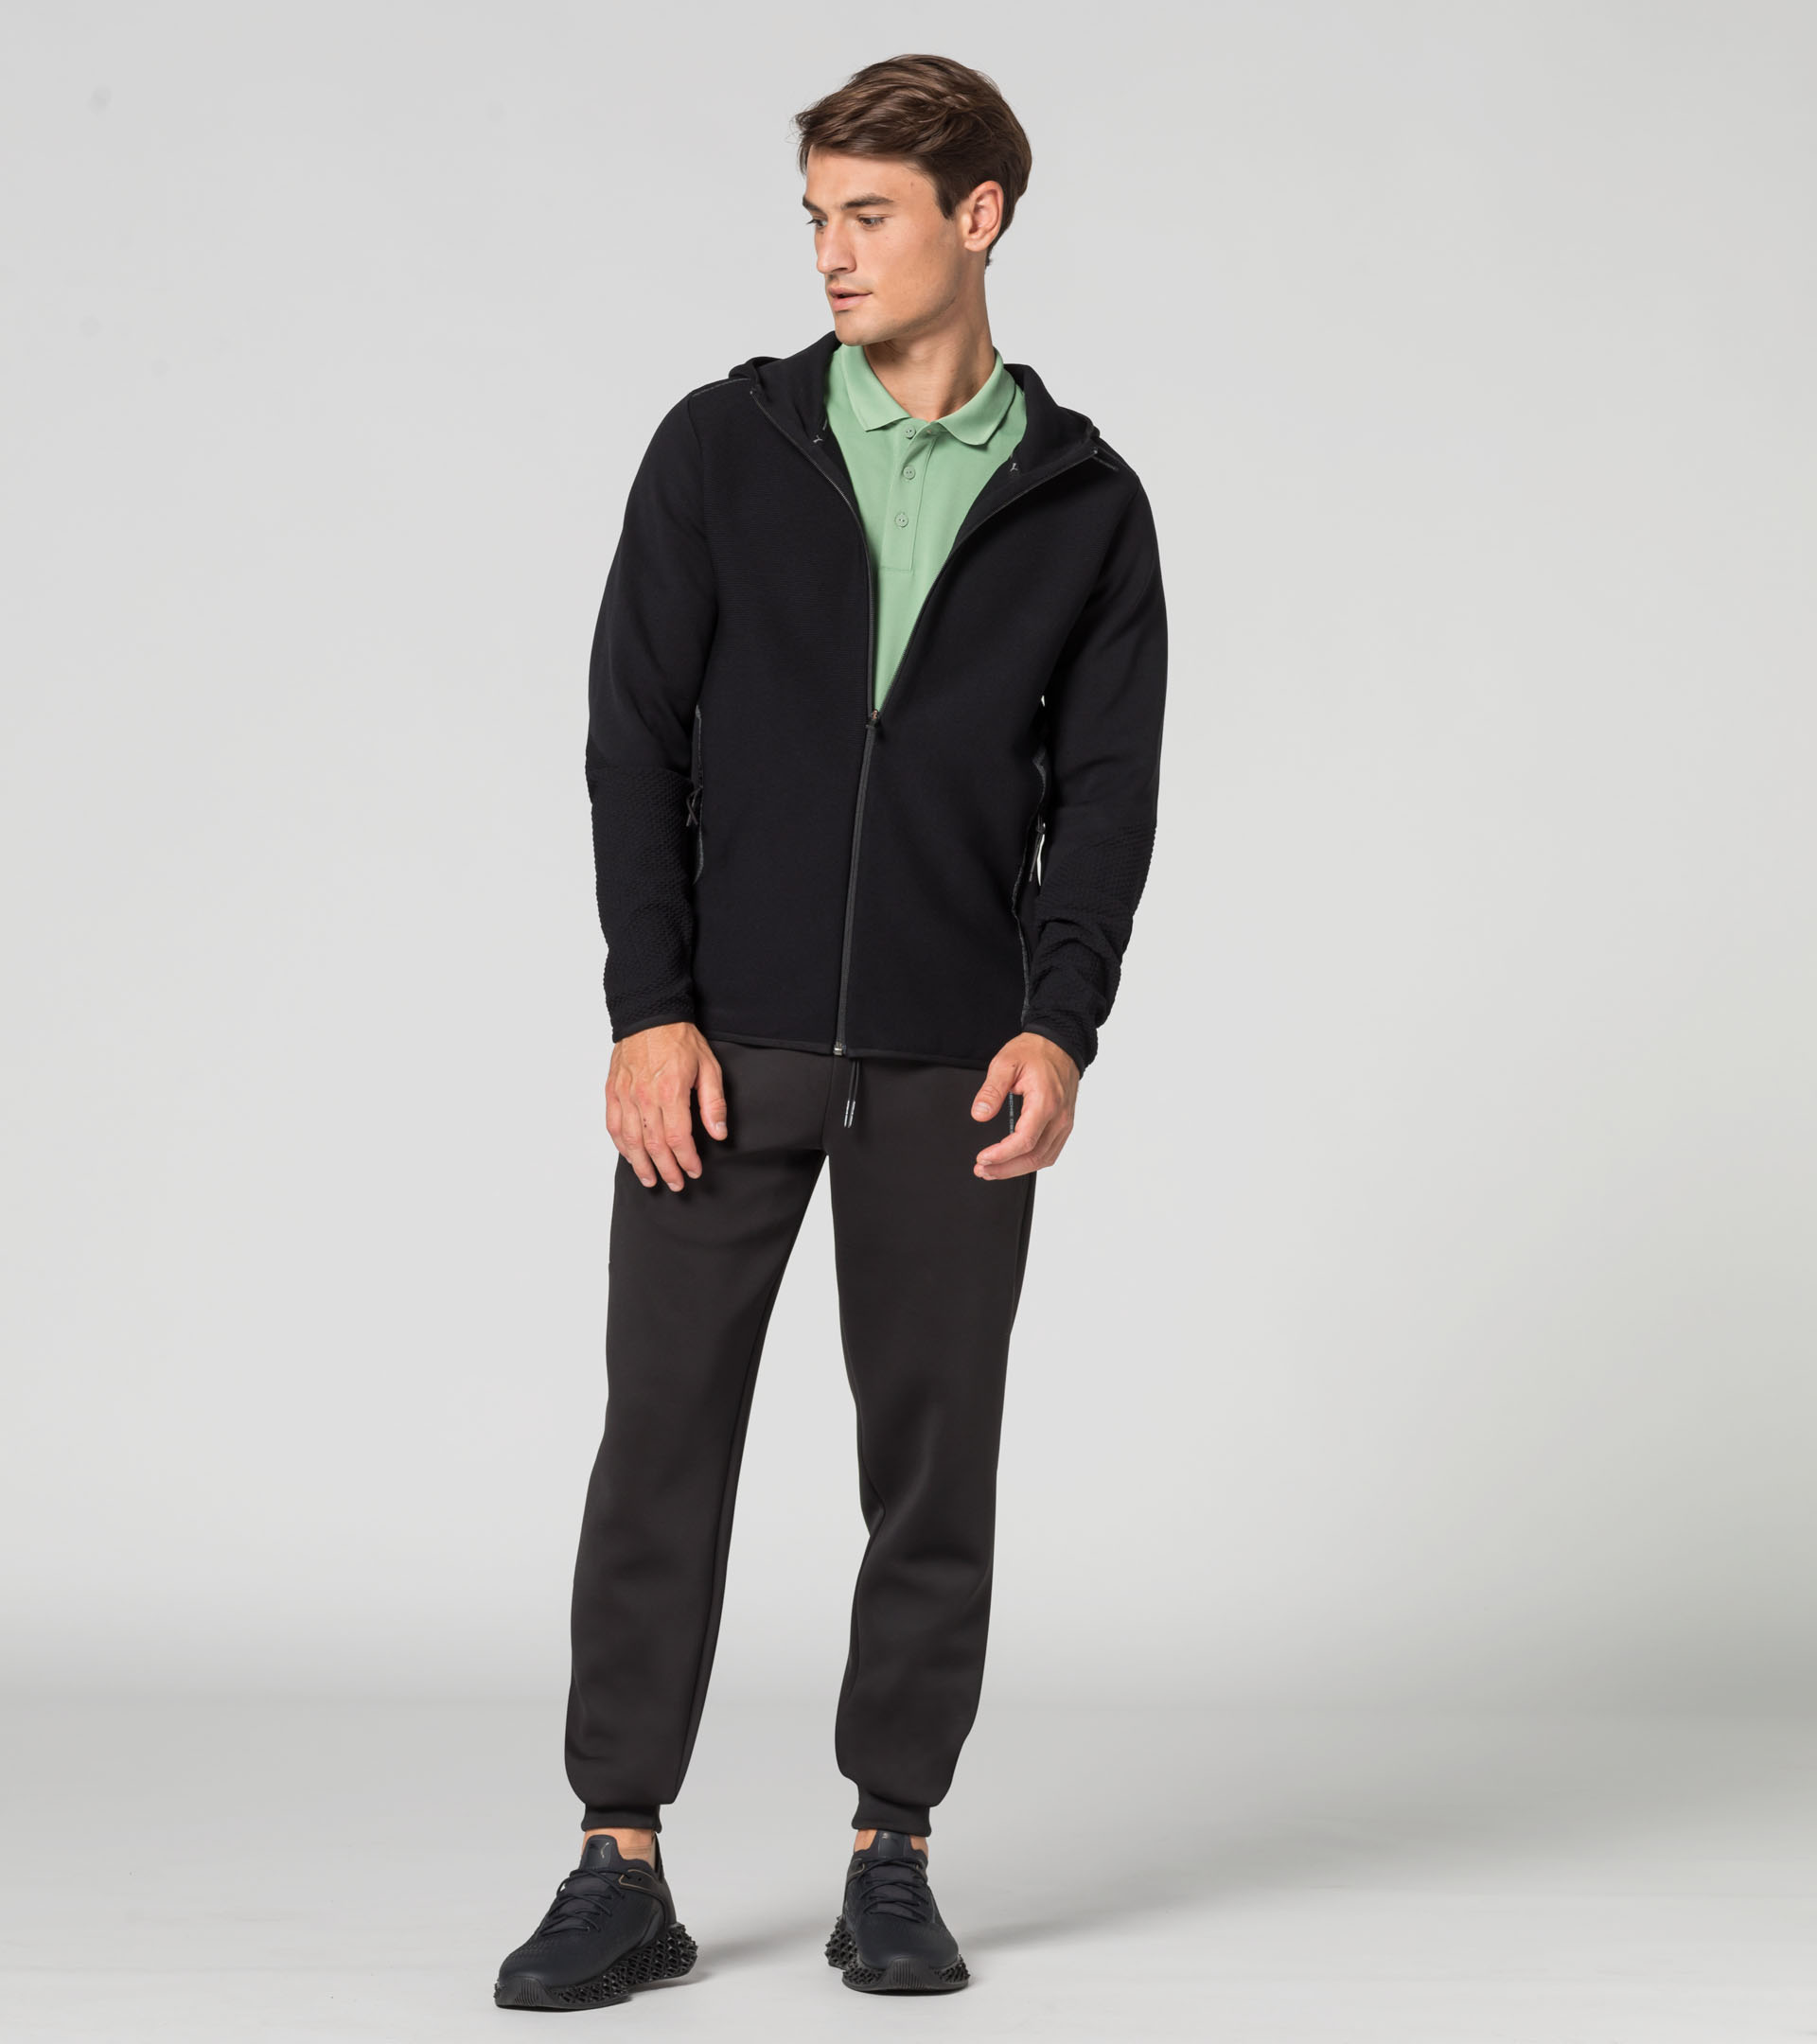 JACQ2K Hoodie - Luxury Sports Sweaters for Men, Porsche Design